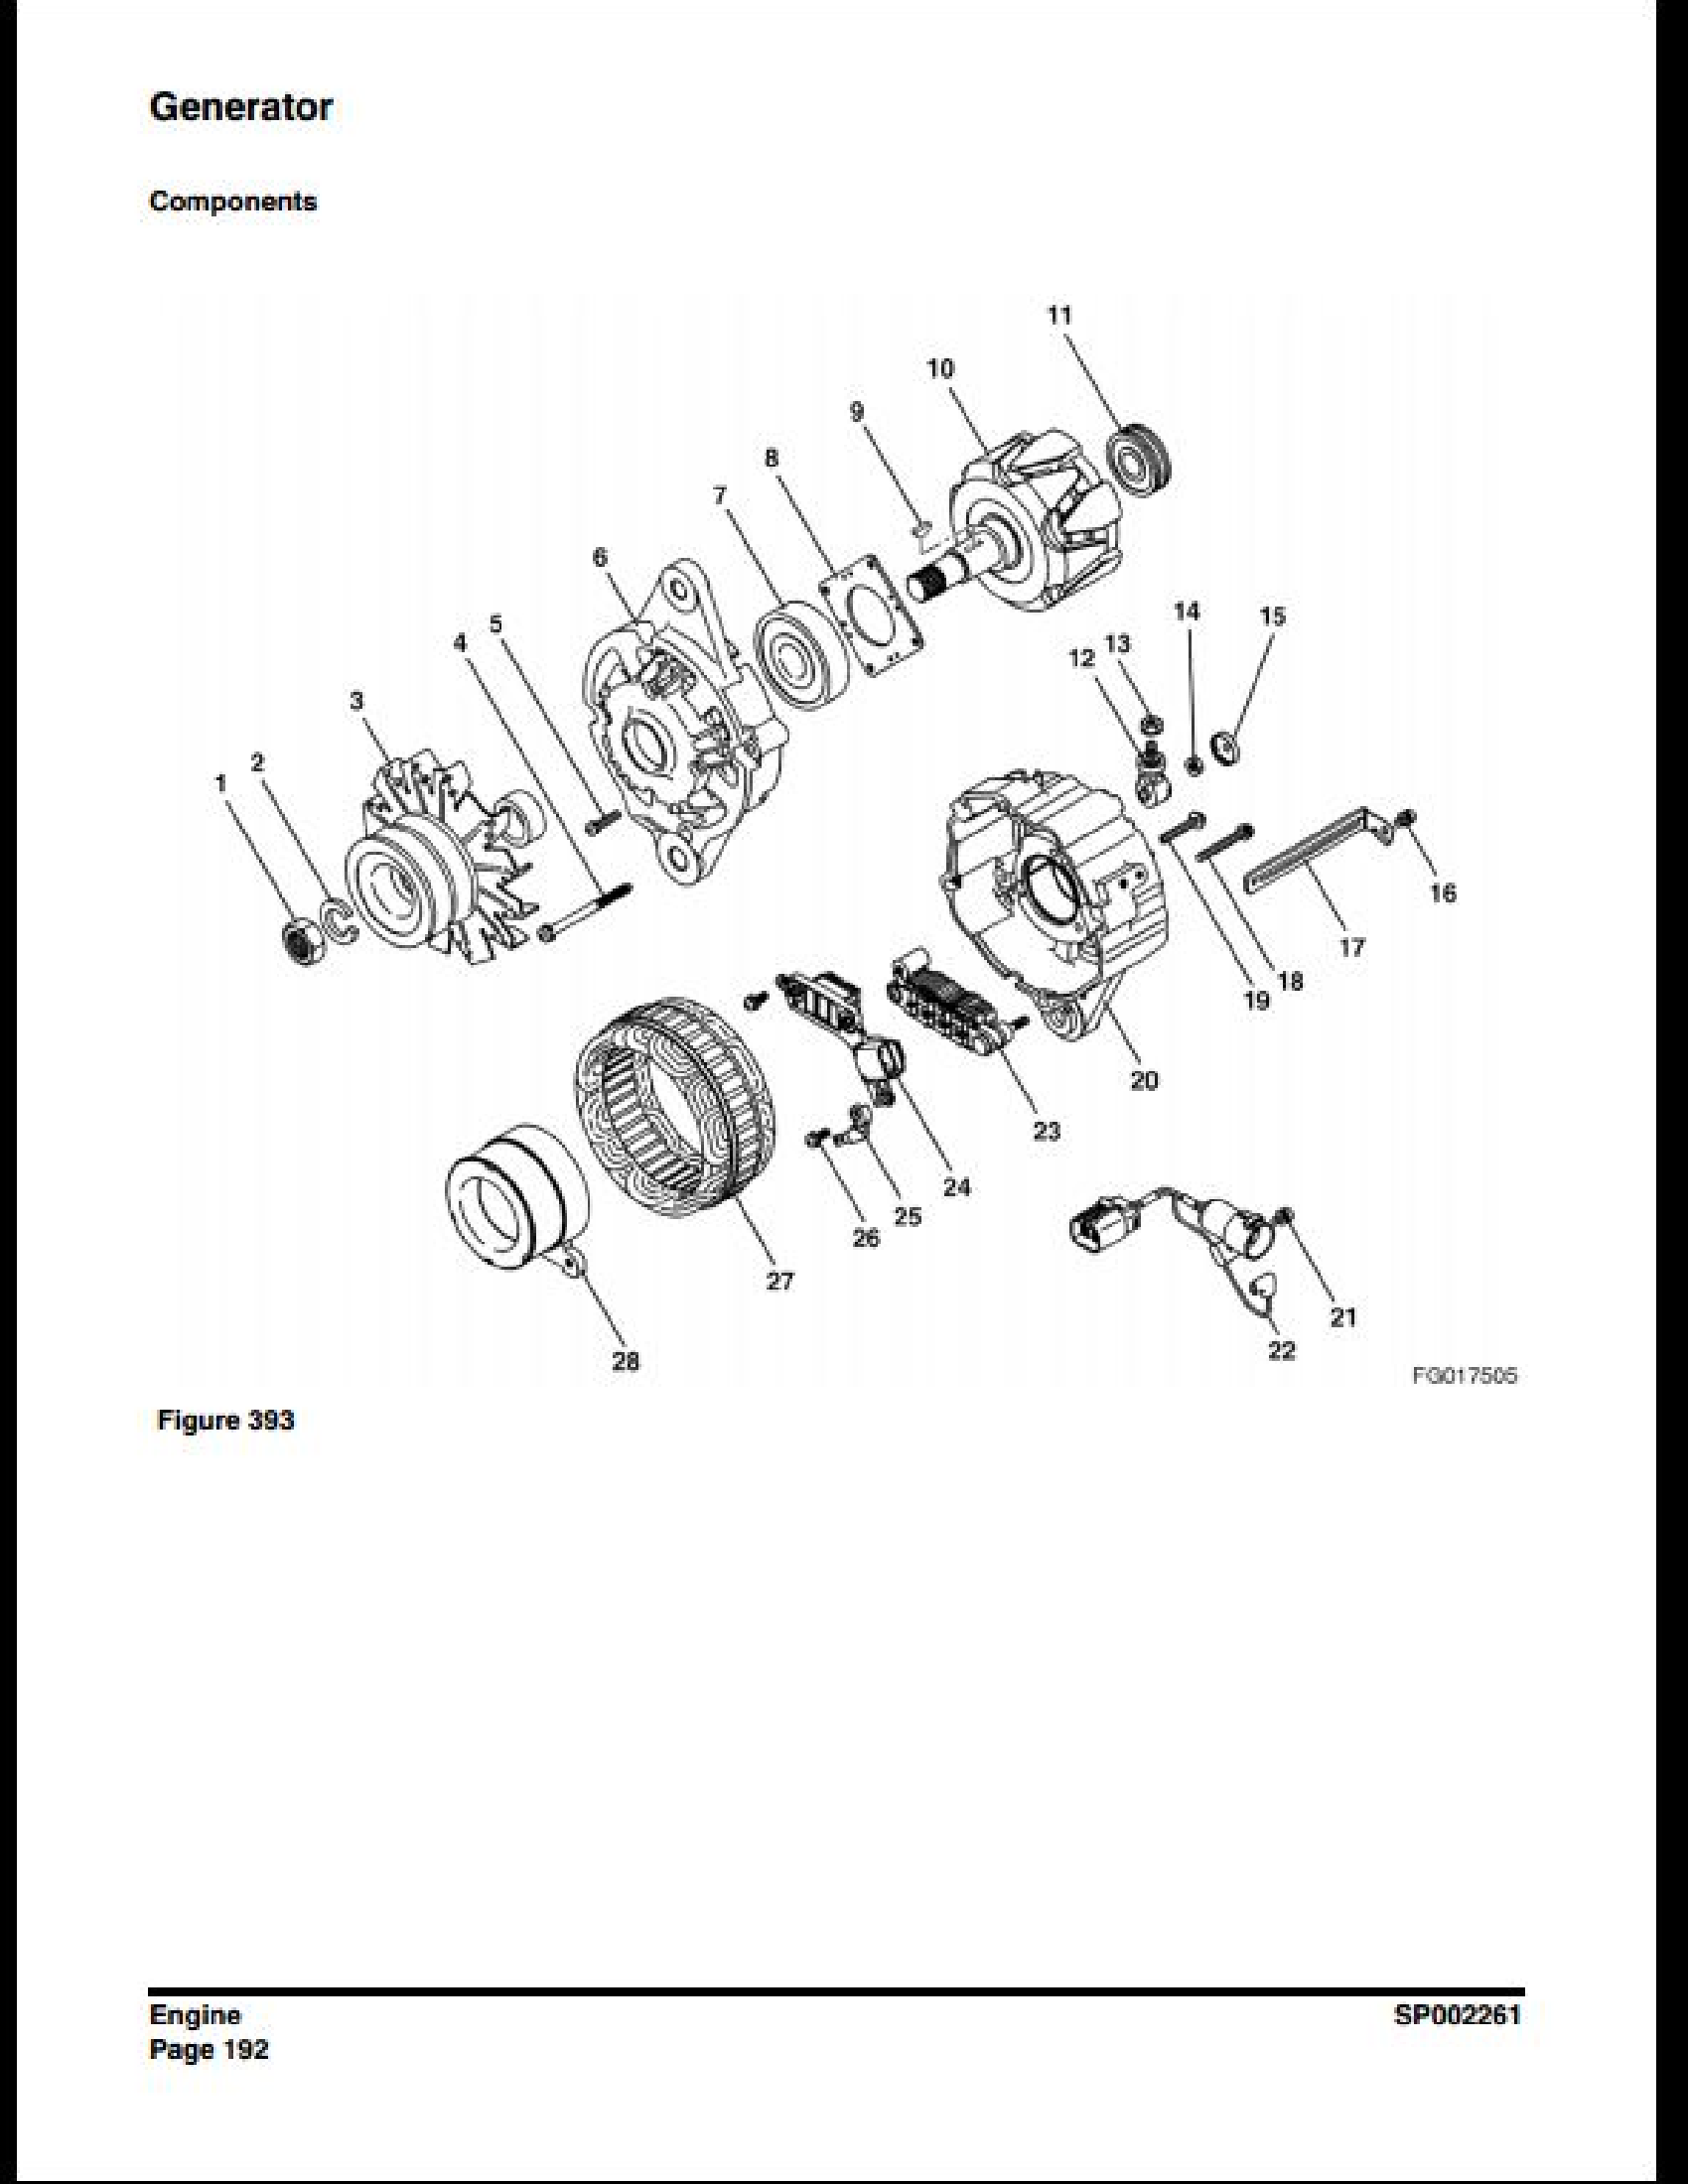 Doosan DX700LC Crawled Excavator manual